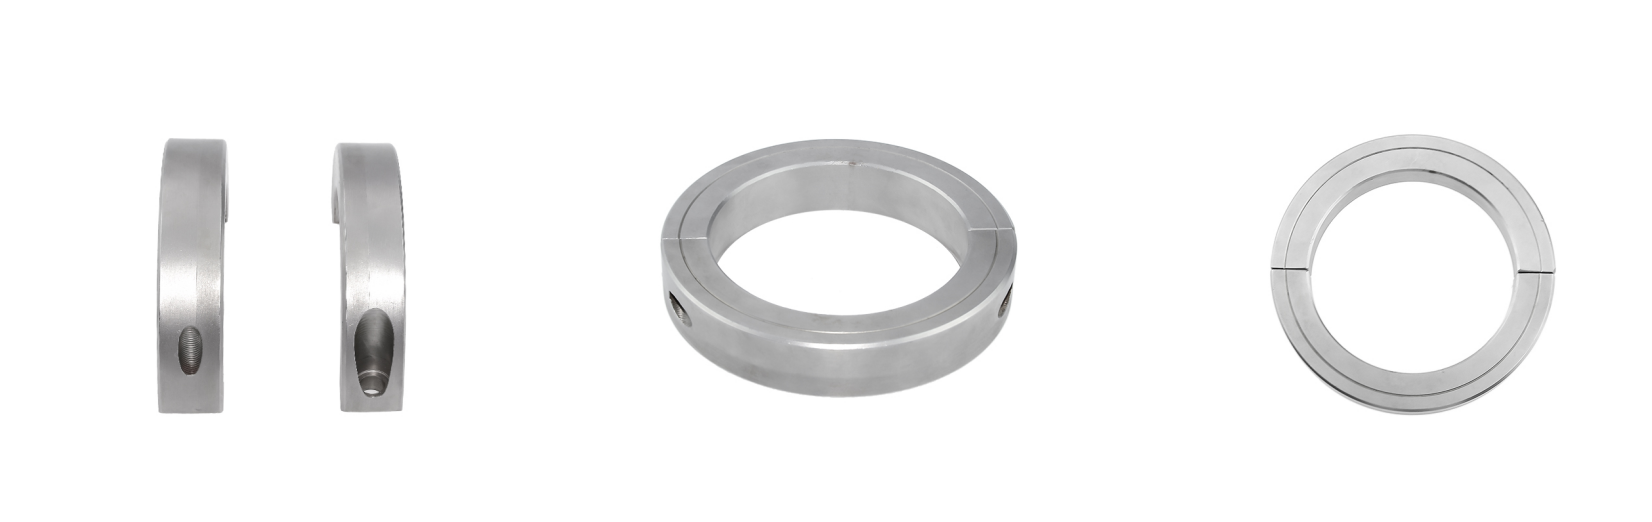 Limit ring positioning shaft ring thrust ring optical shaft fixing lock Shaft Collars